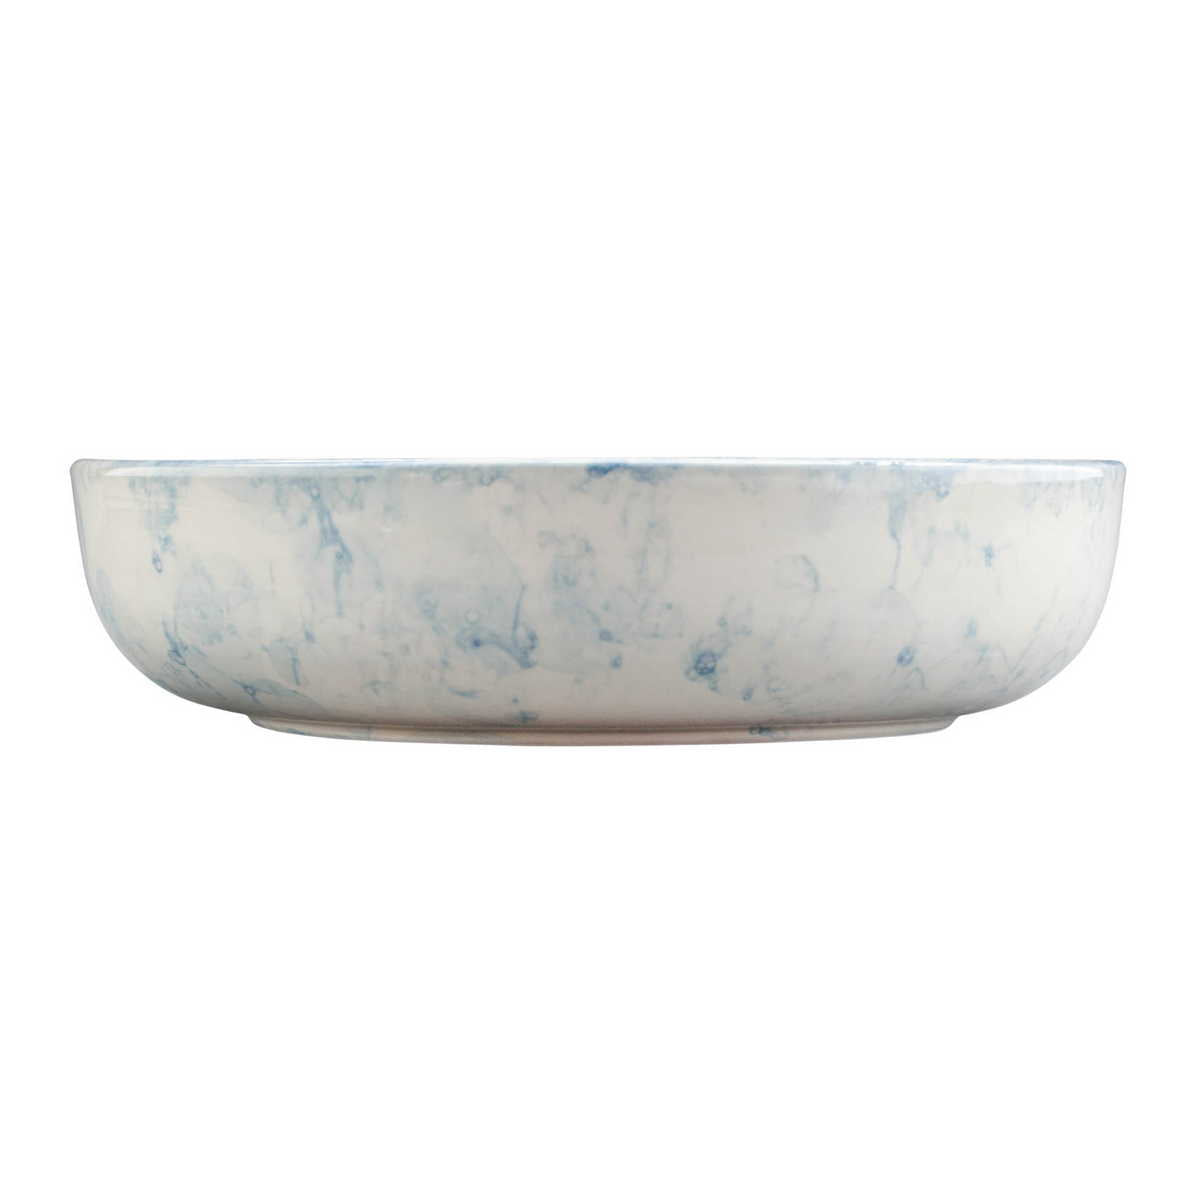 Bowls & Dishes Espuma schaal midnight blue - 27 cm